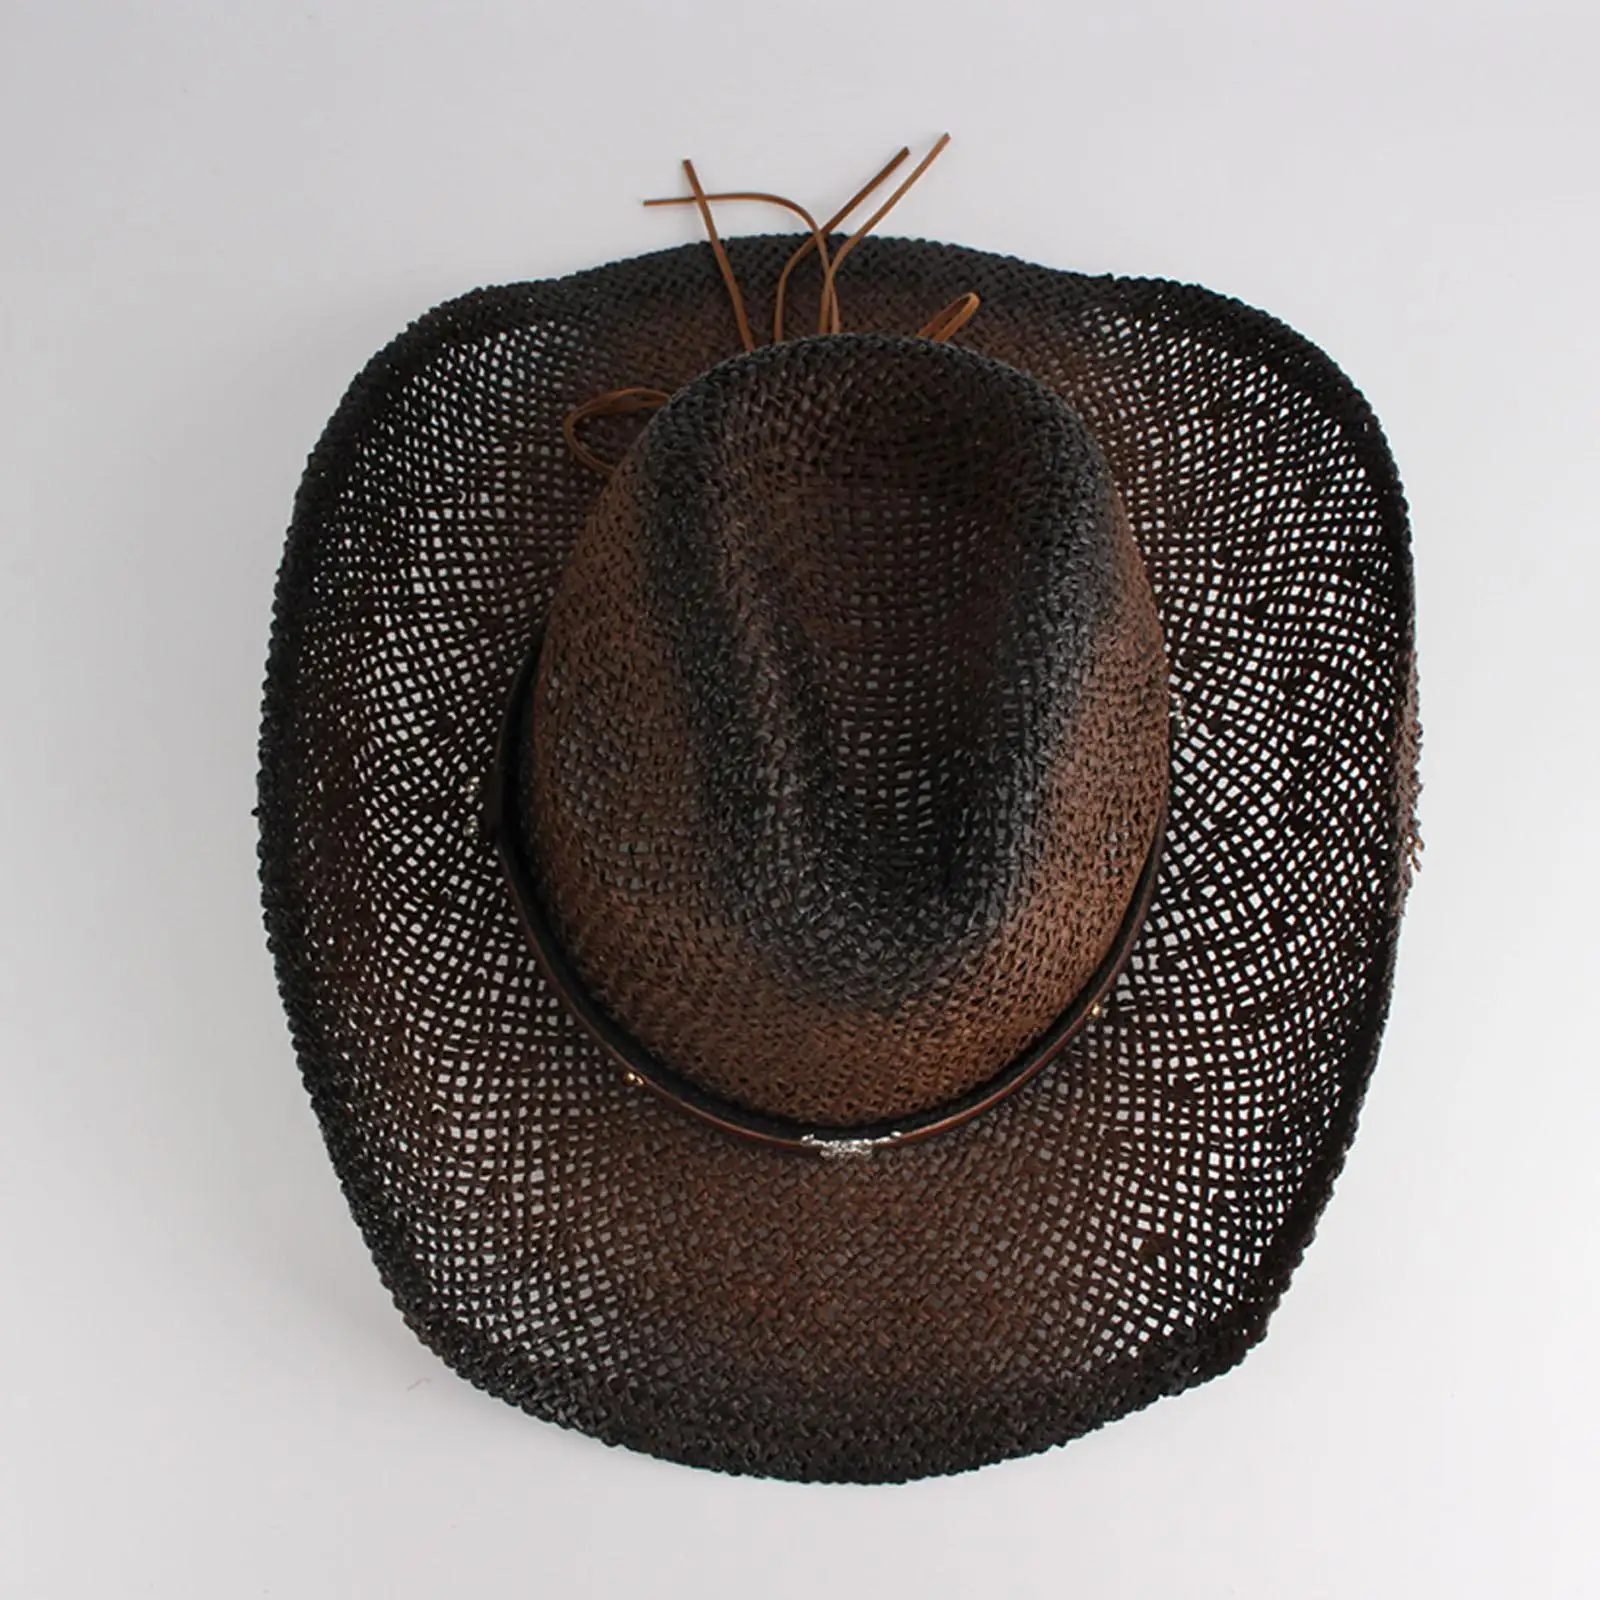 Vintage Straw Cowboy Hat Sombreros Vagueros Shapeable Sun Hat Cowboy Hats for Rodeo Beach travel Horseback Riding